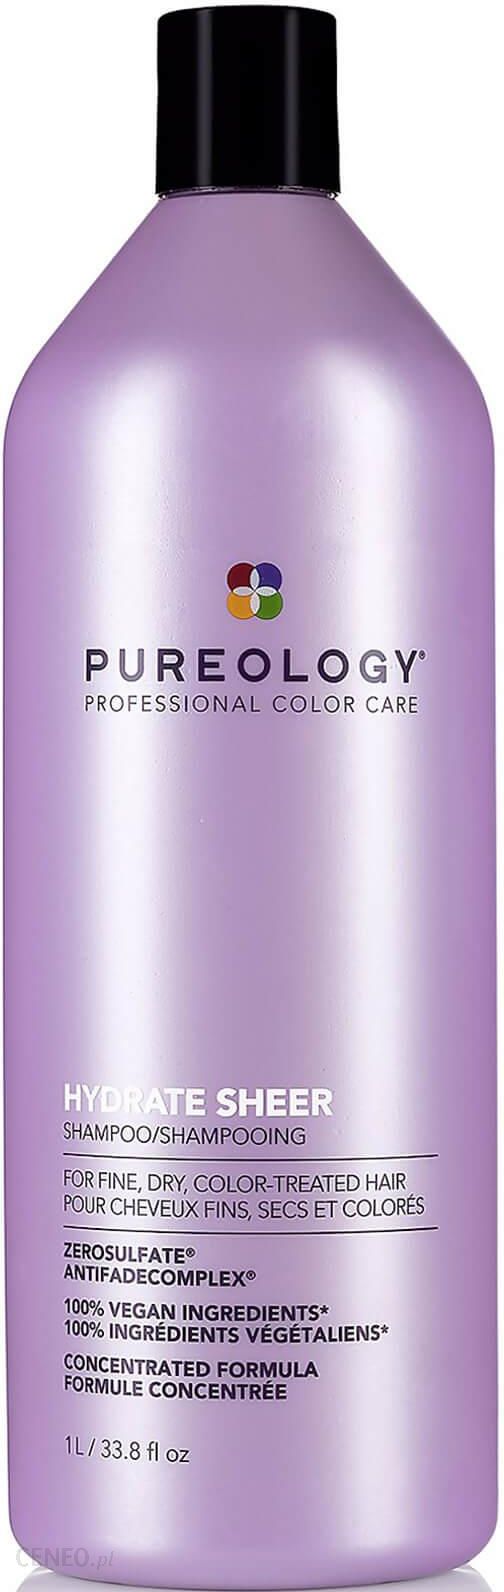 pureology szampon 1litr cena